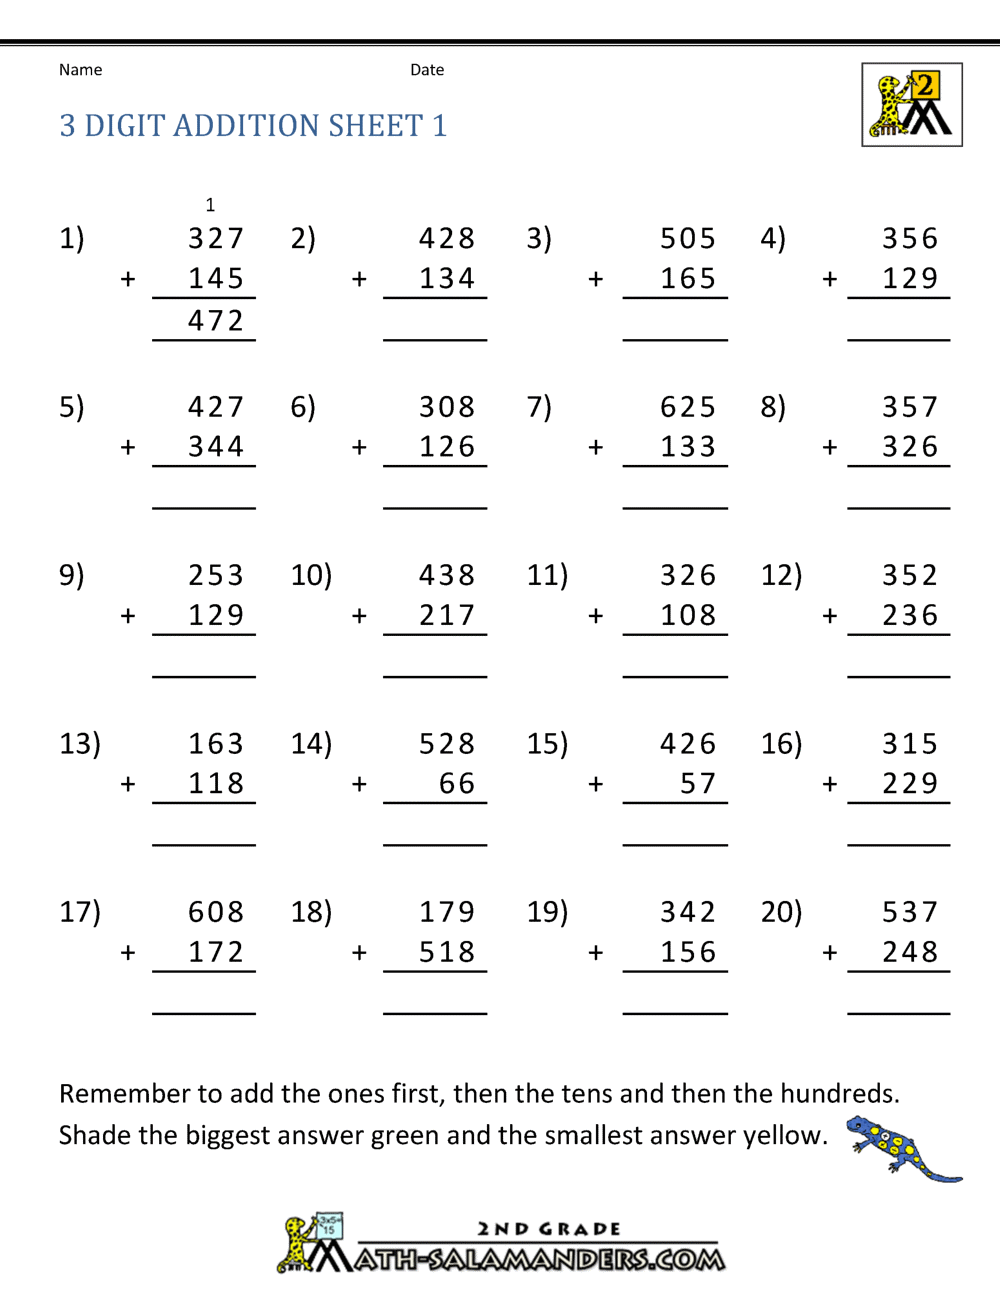 orangeflowerpatterns-download-2nd-grade-math-worksheets-addition